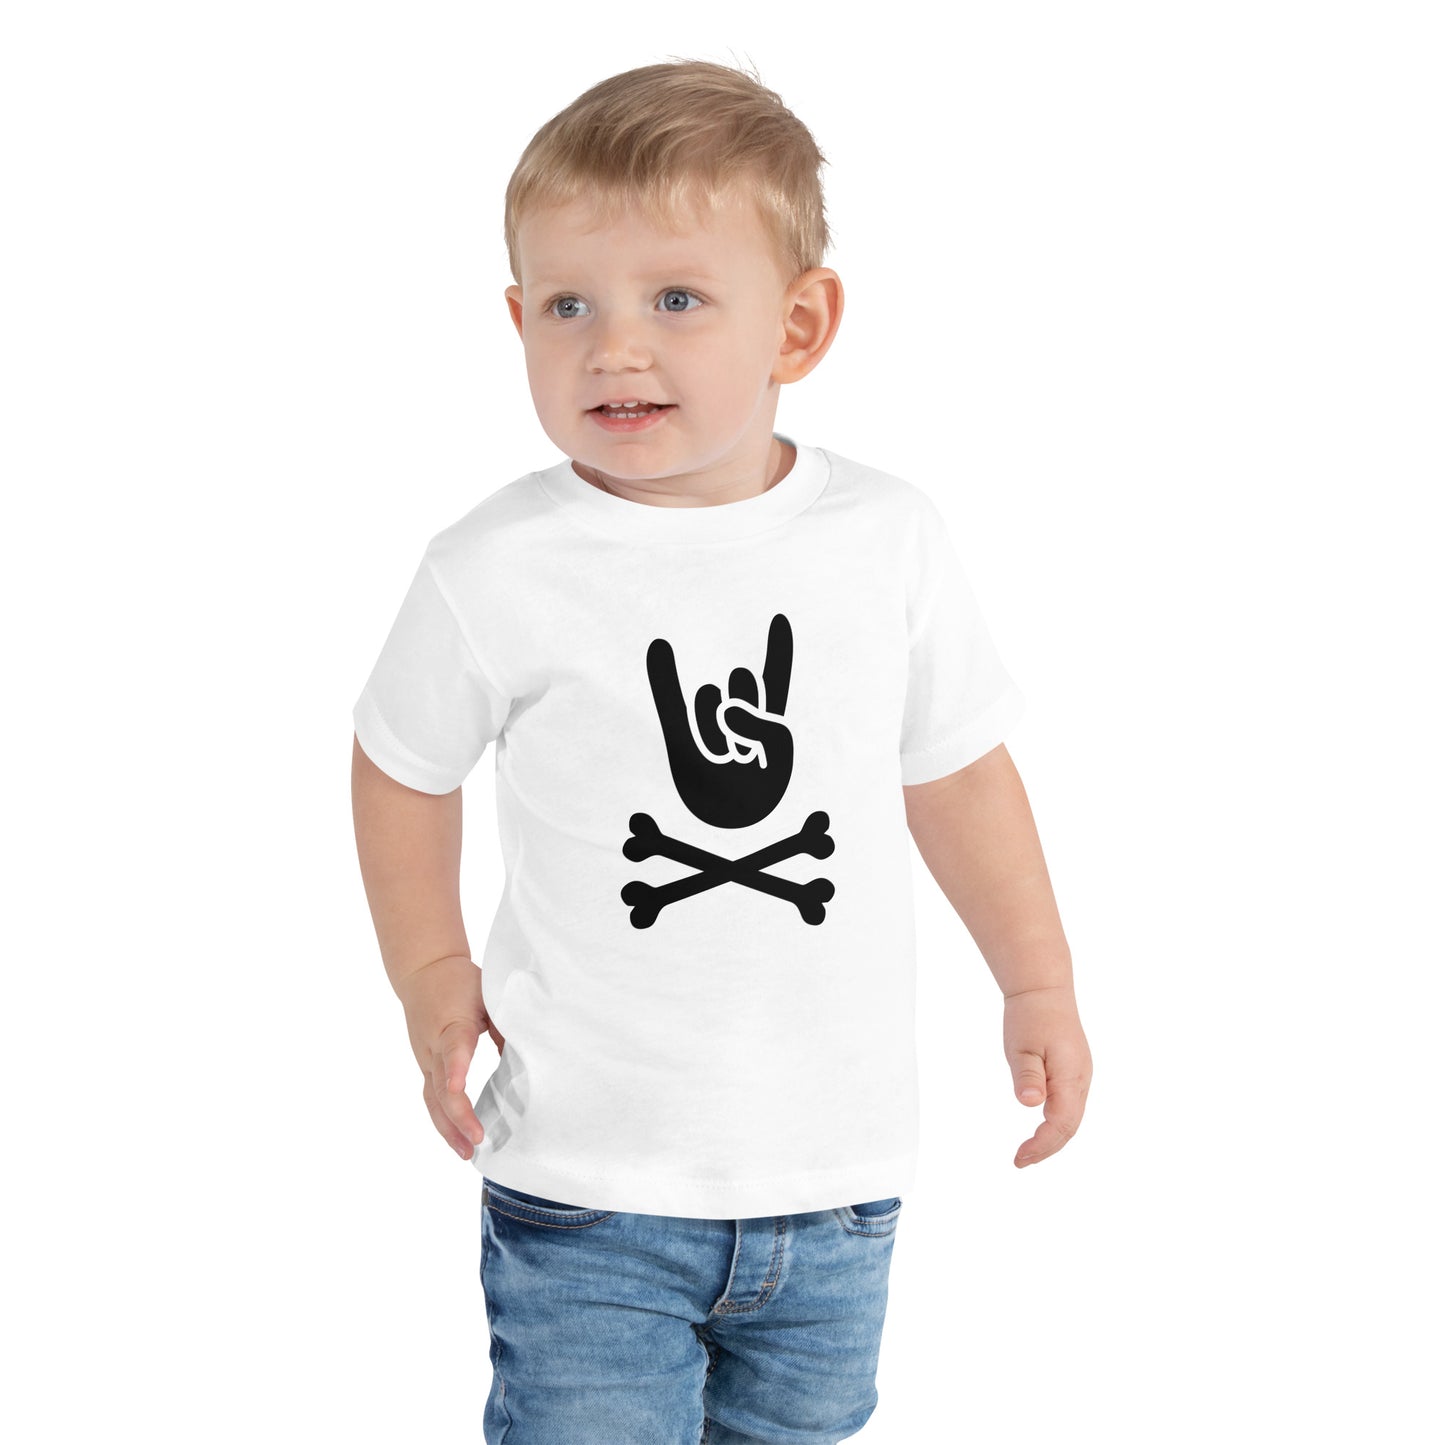 Big hand to ROCKNROLL Toddler Short Sleeve White T-Shirt